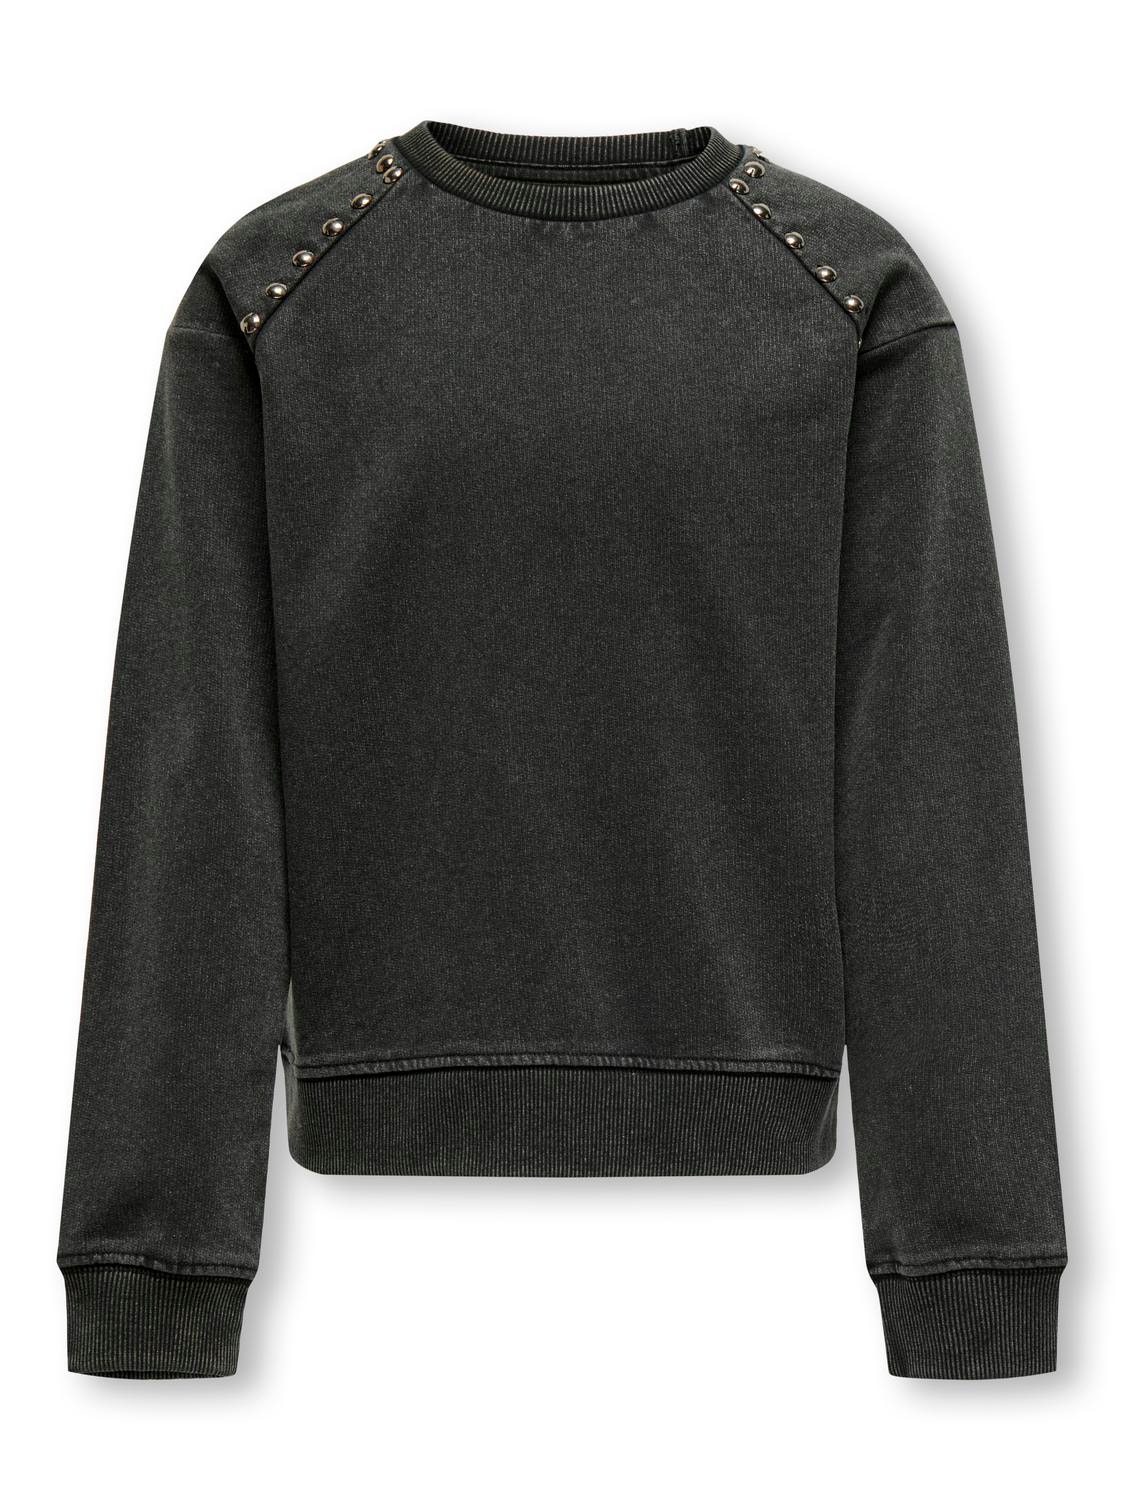 ONLY o-neck sweatshirt -Black - 15320273